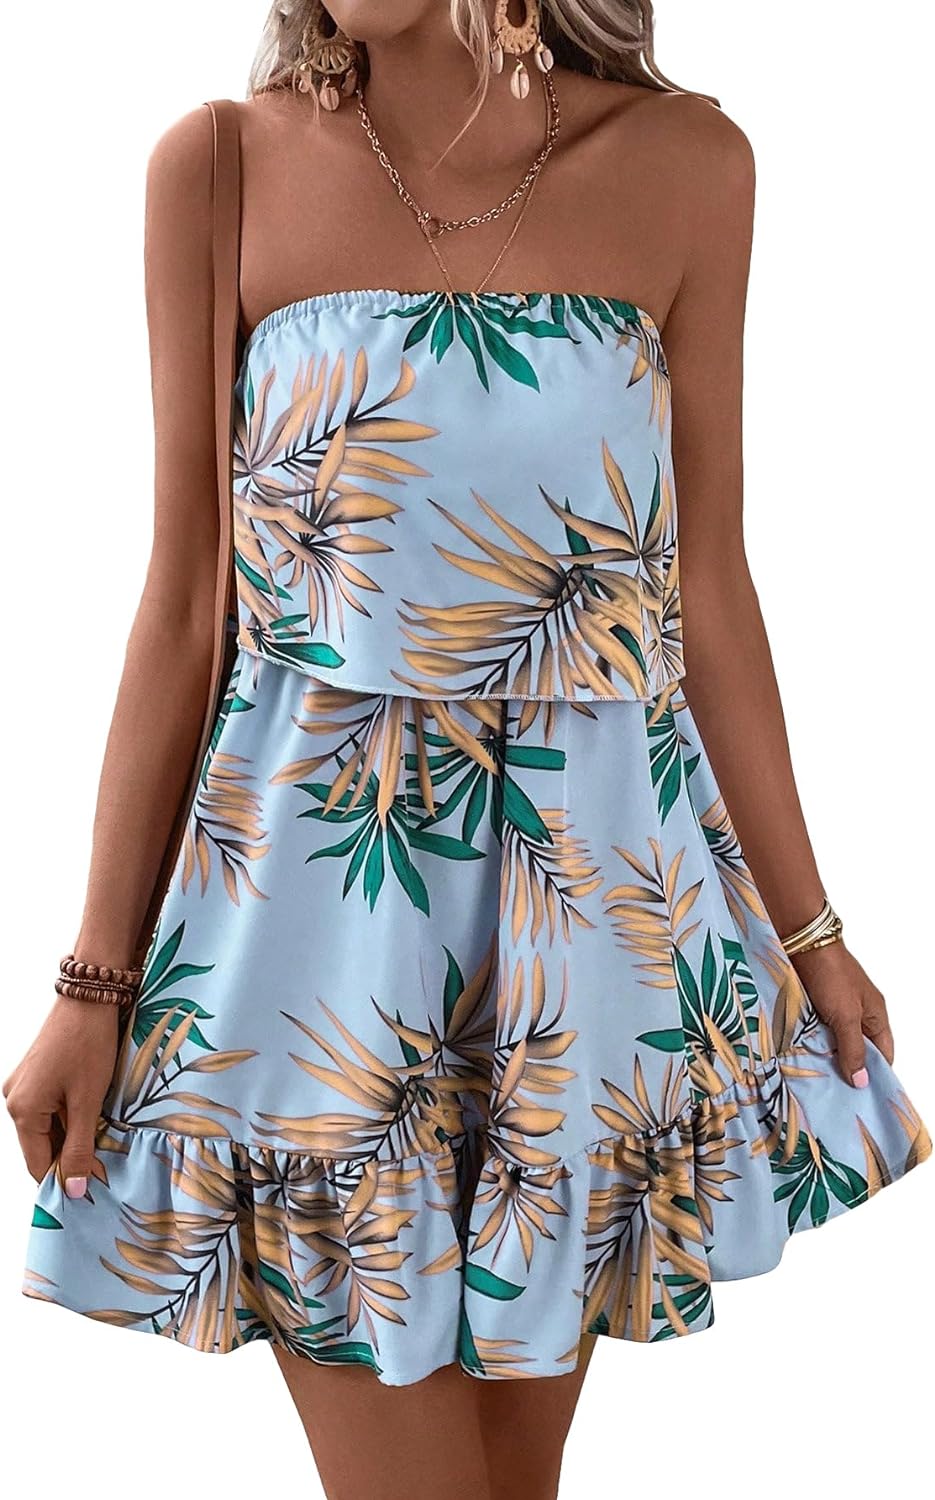 SOLY HUX Womens Floral Summer Beach Casual Sun Dresses Tropical Leaf Print Sleeveless Ruffle Hem Tube Mini Dress